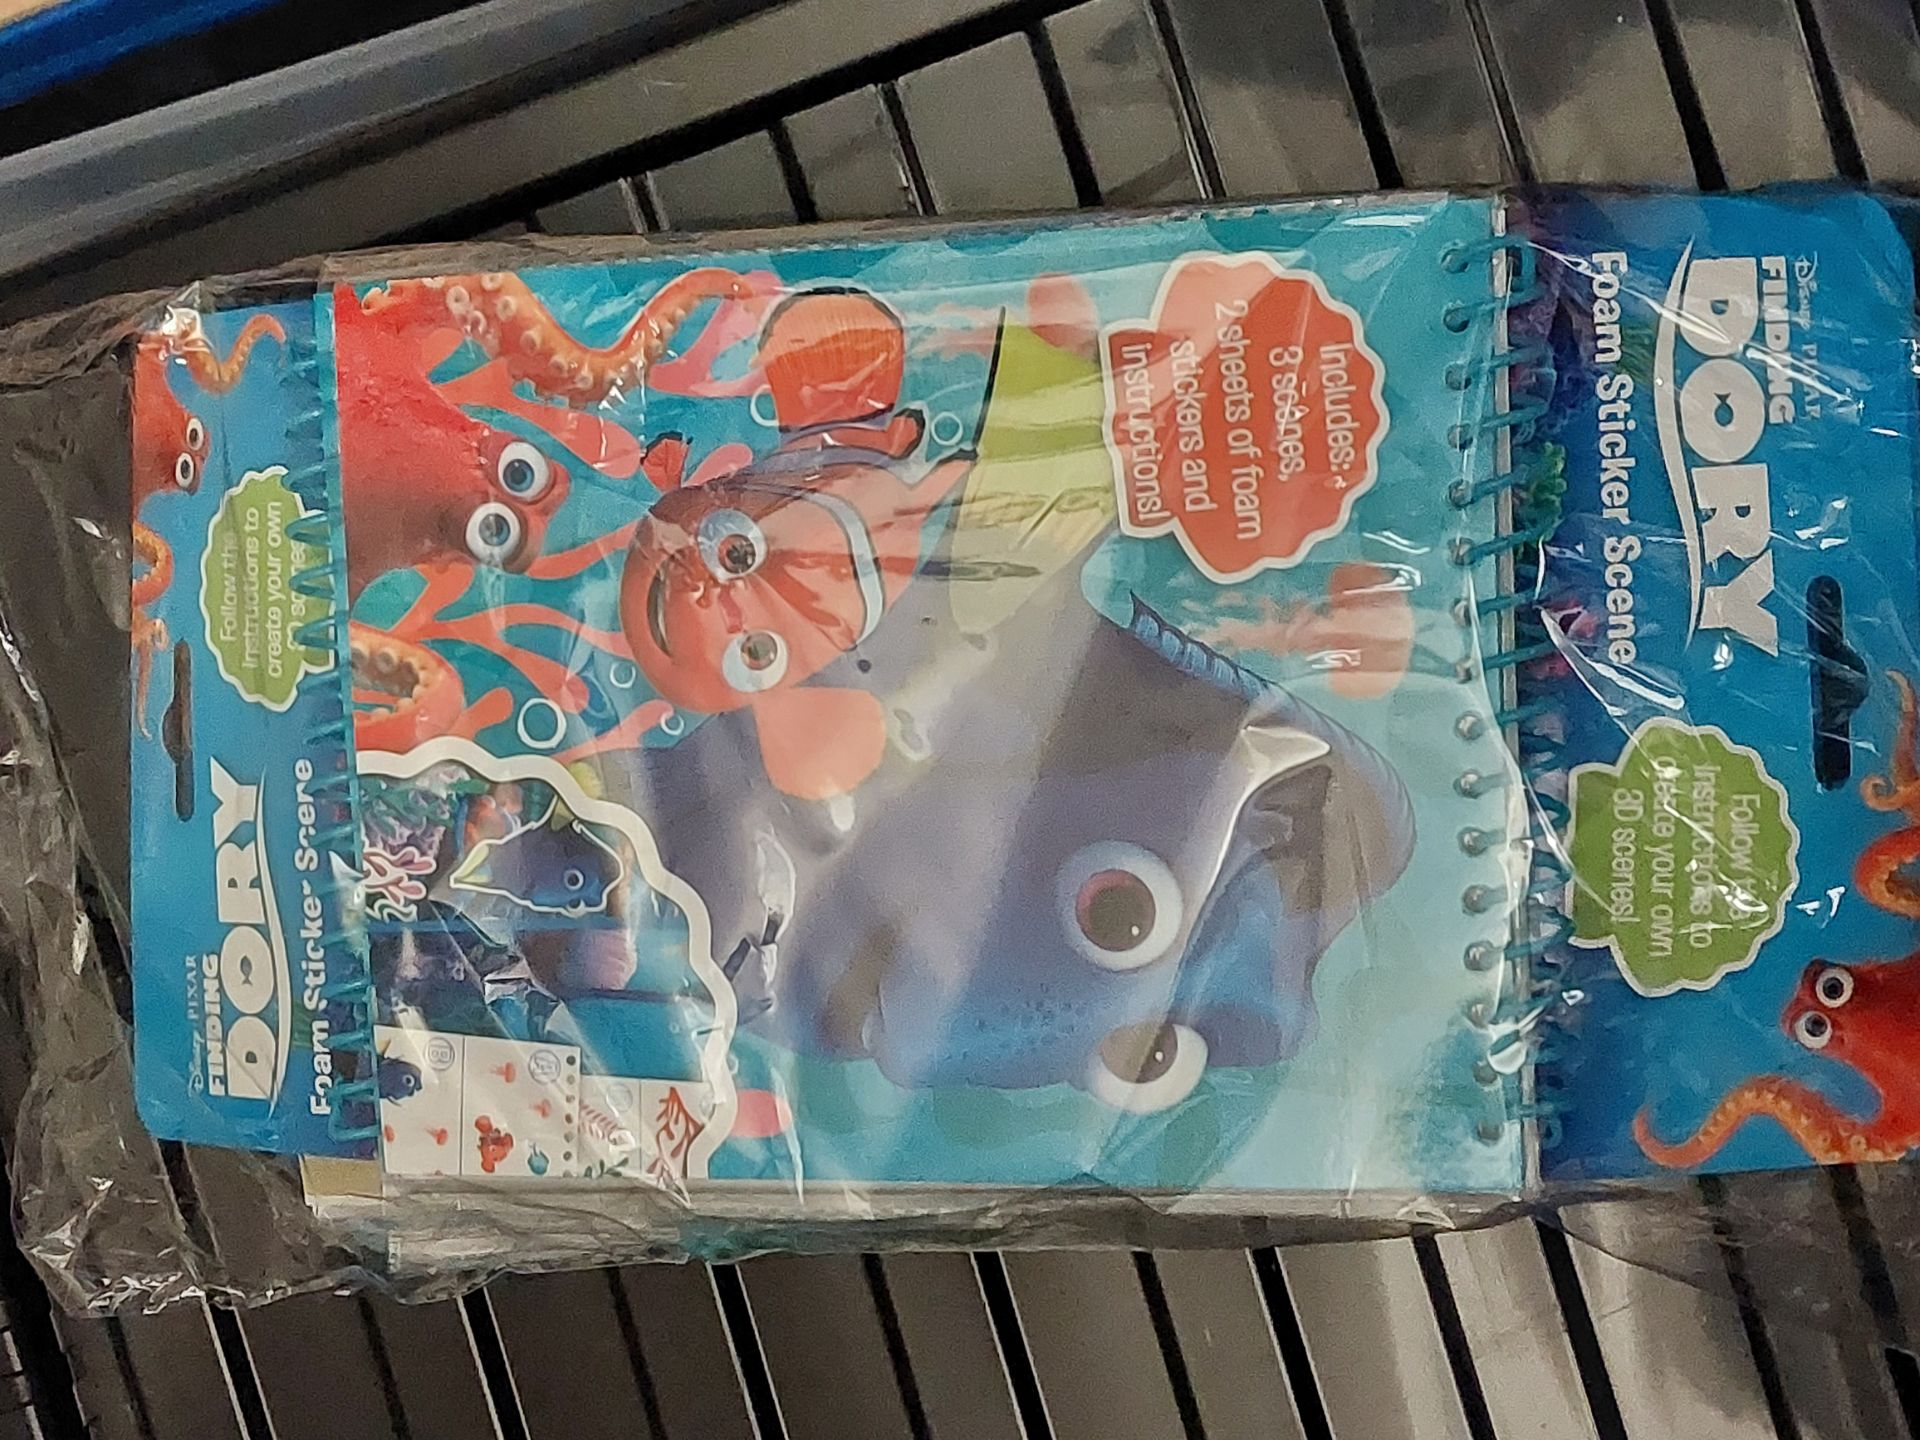 Finding Dory Disney Foam Sticker Books X 12 - Image 2 of 2